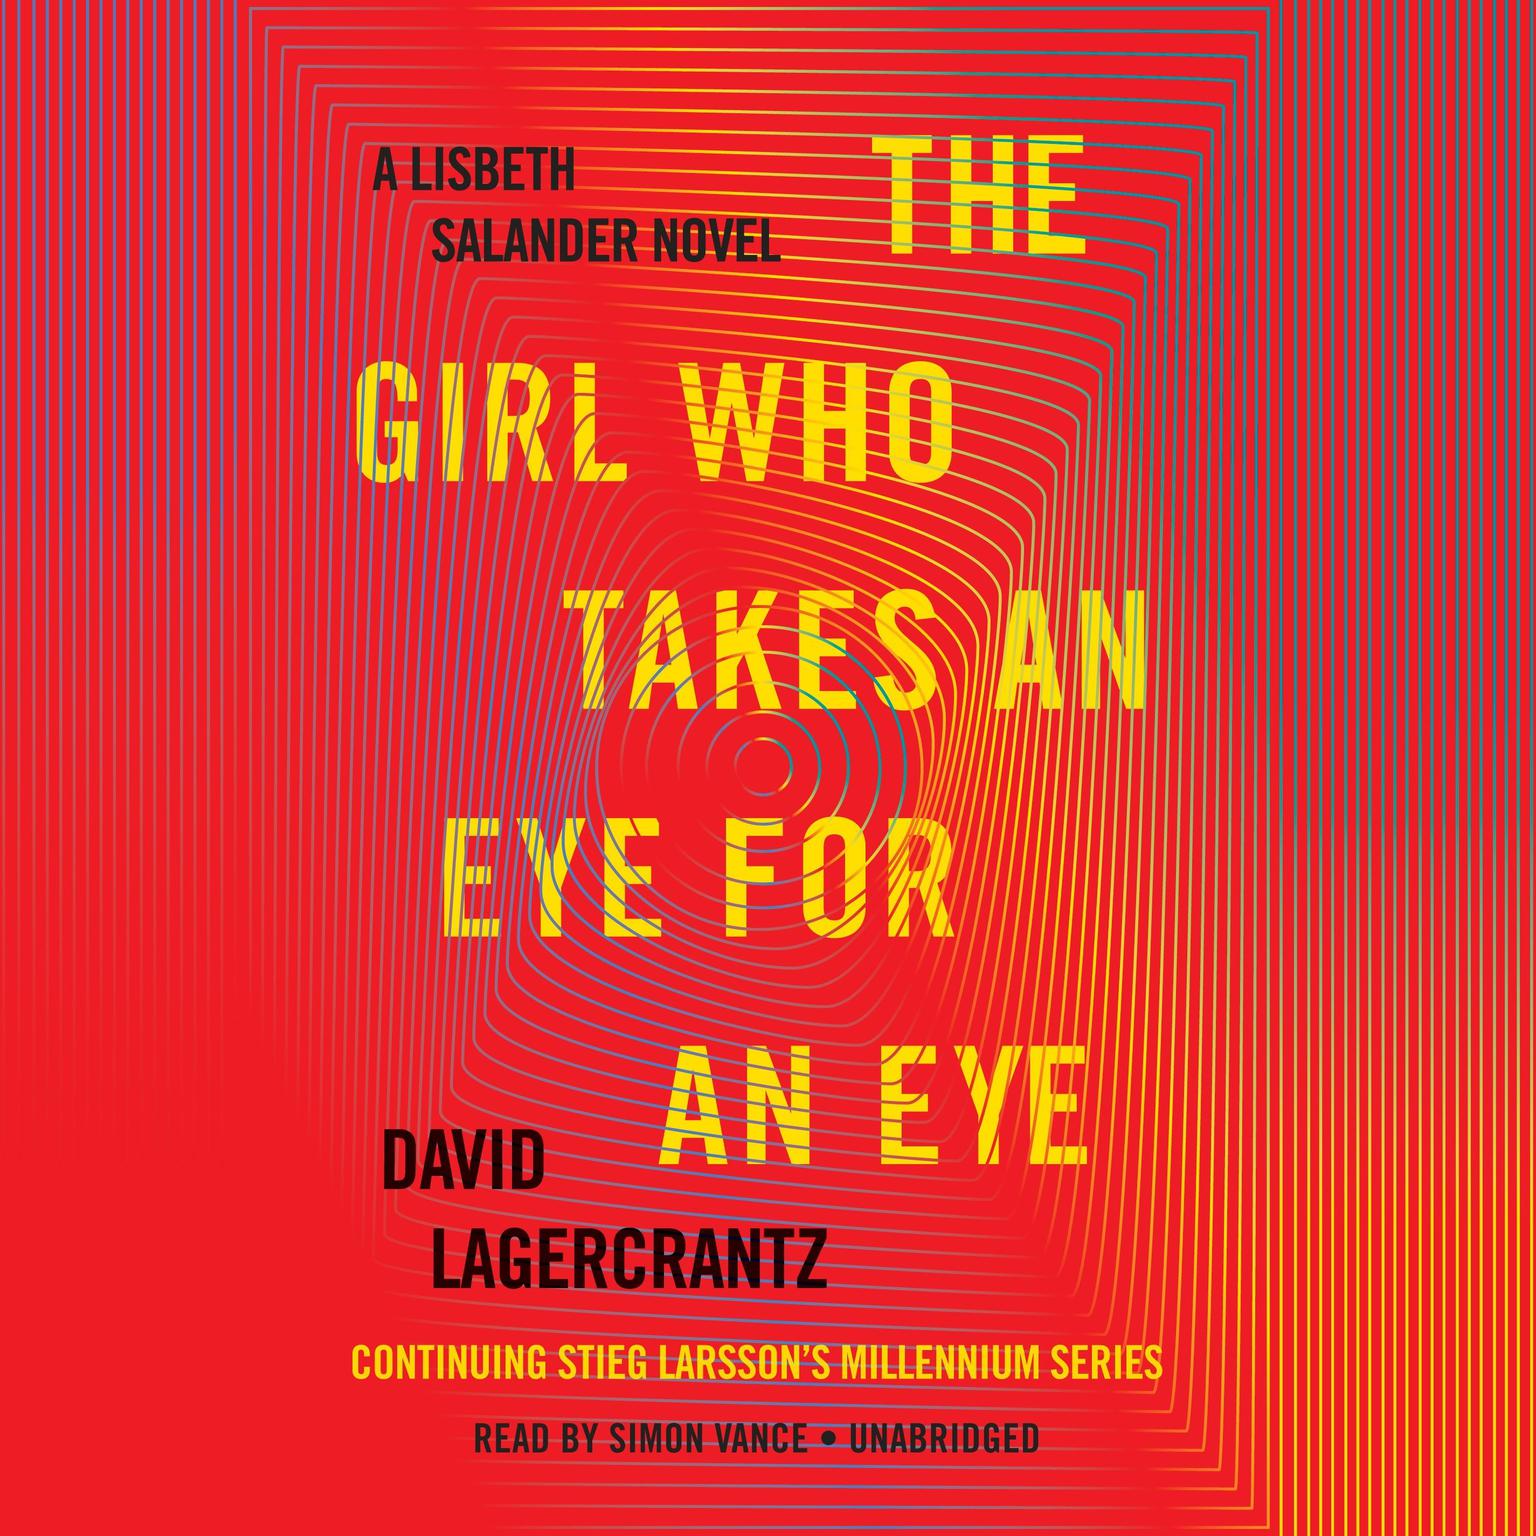 The Girl Who Takes an Eye for an Eye: A Lisbeth Salander novel, continuing Stieg Larssons Millennium Series Audiobook, by David Lagercrantz